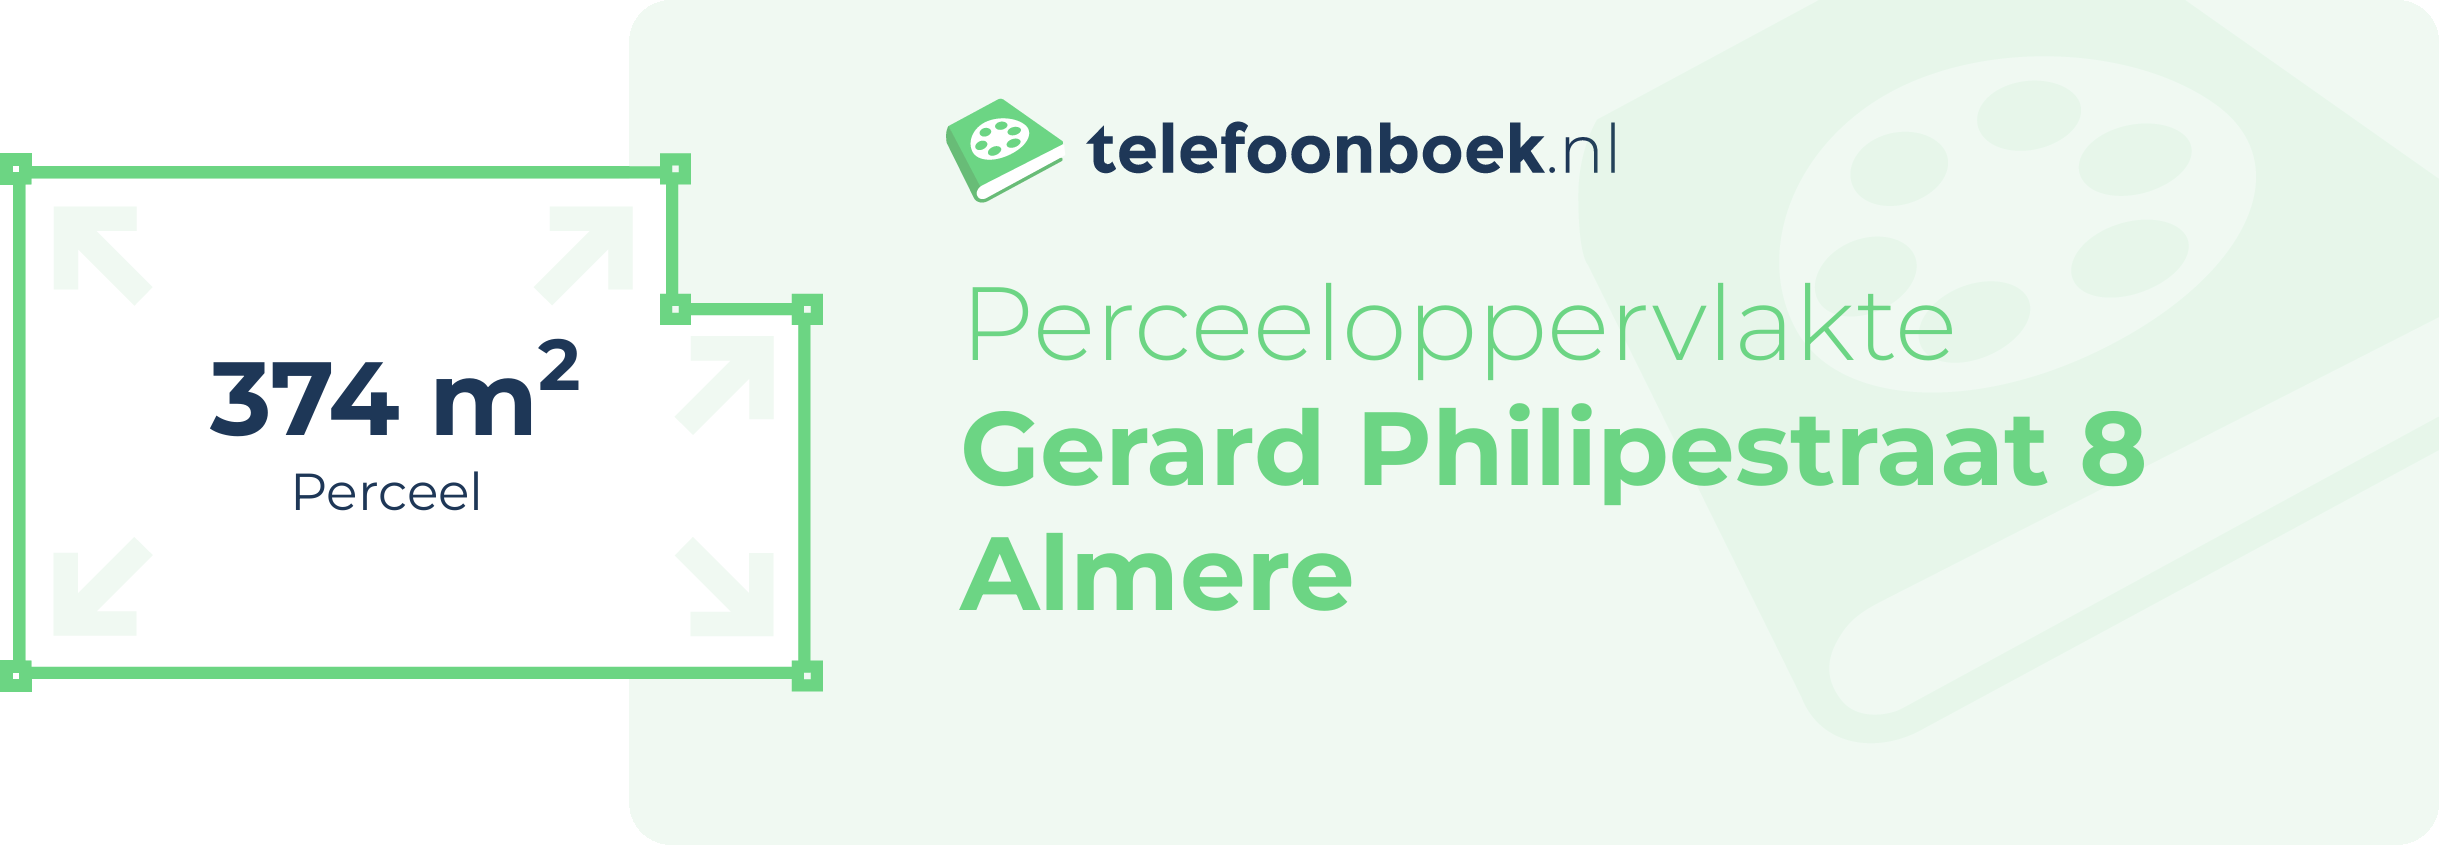 Perceeloppervlakte Gerard Philipestraat 8 Almere